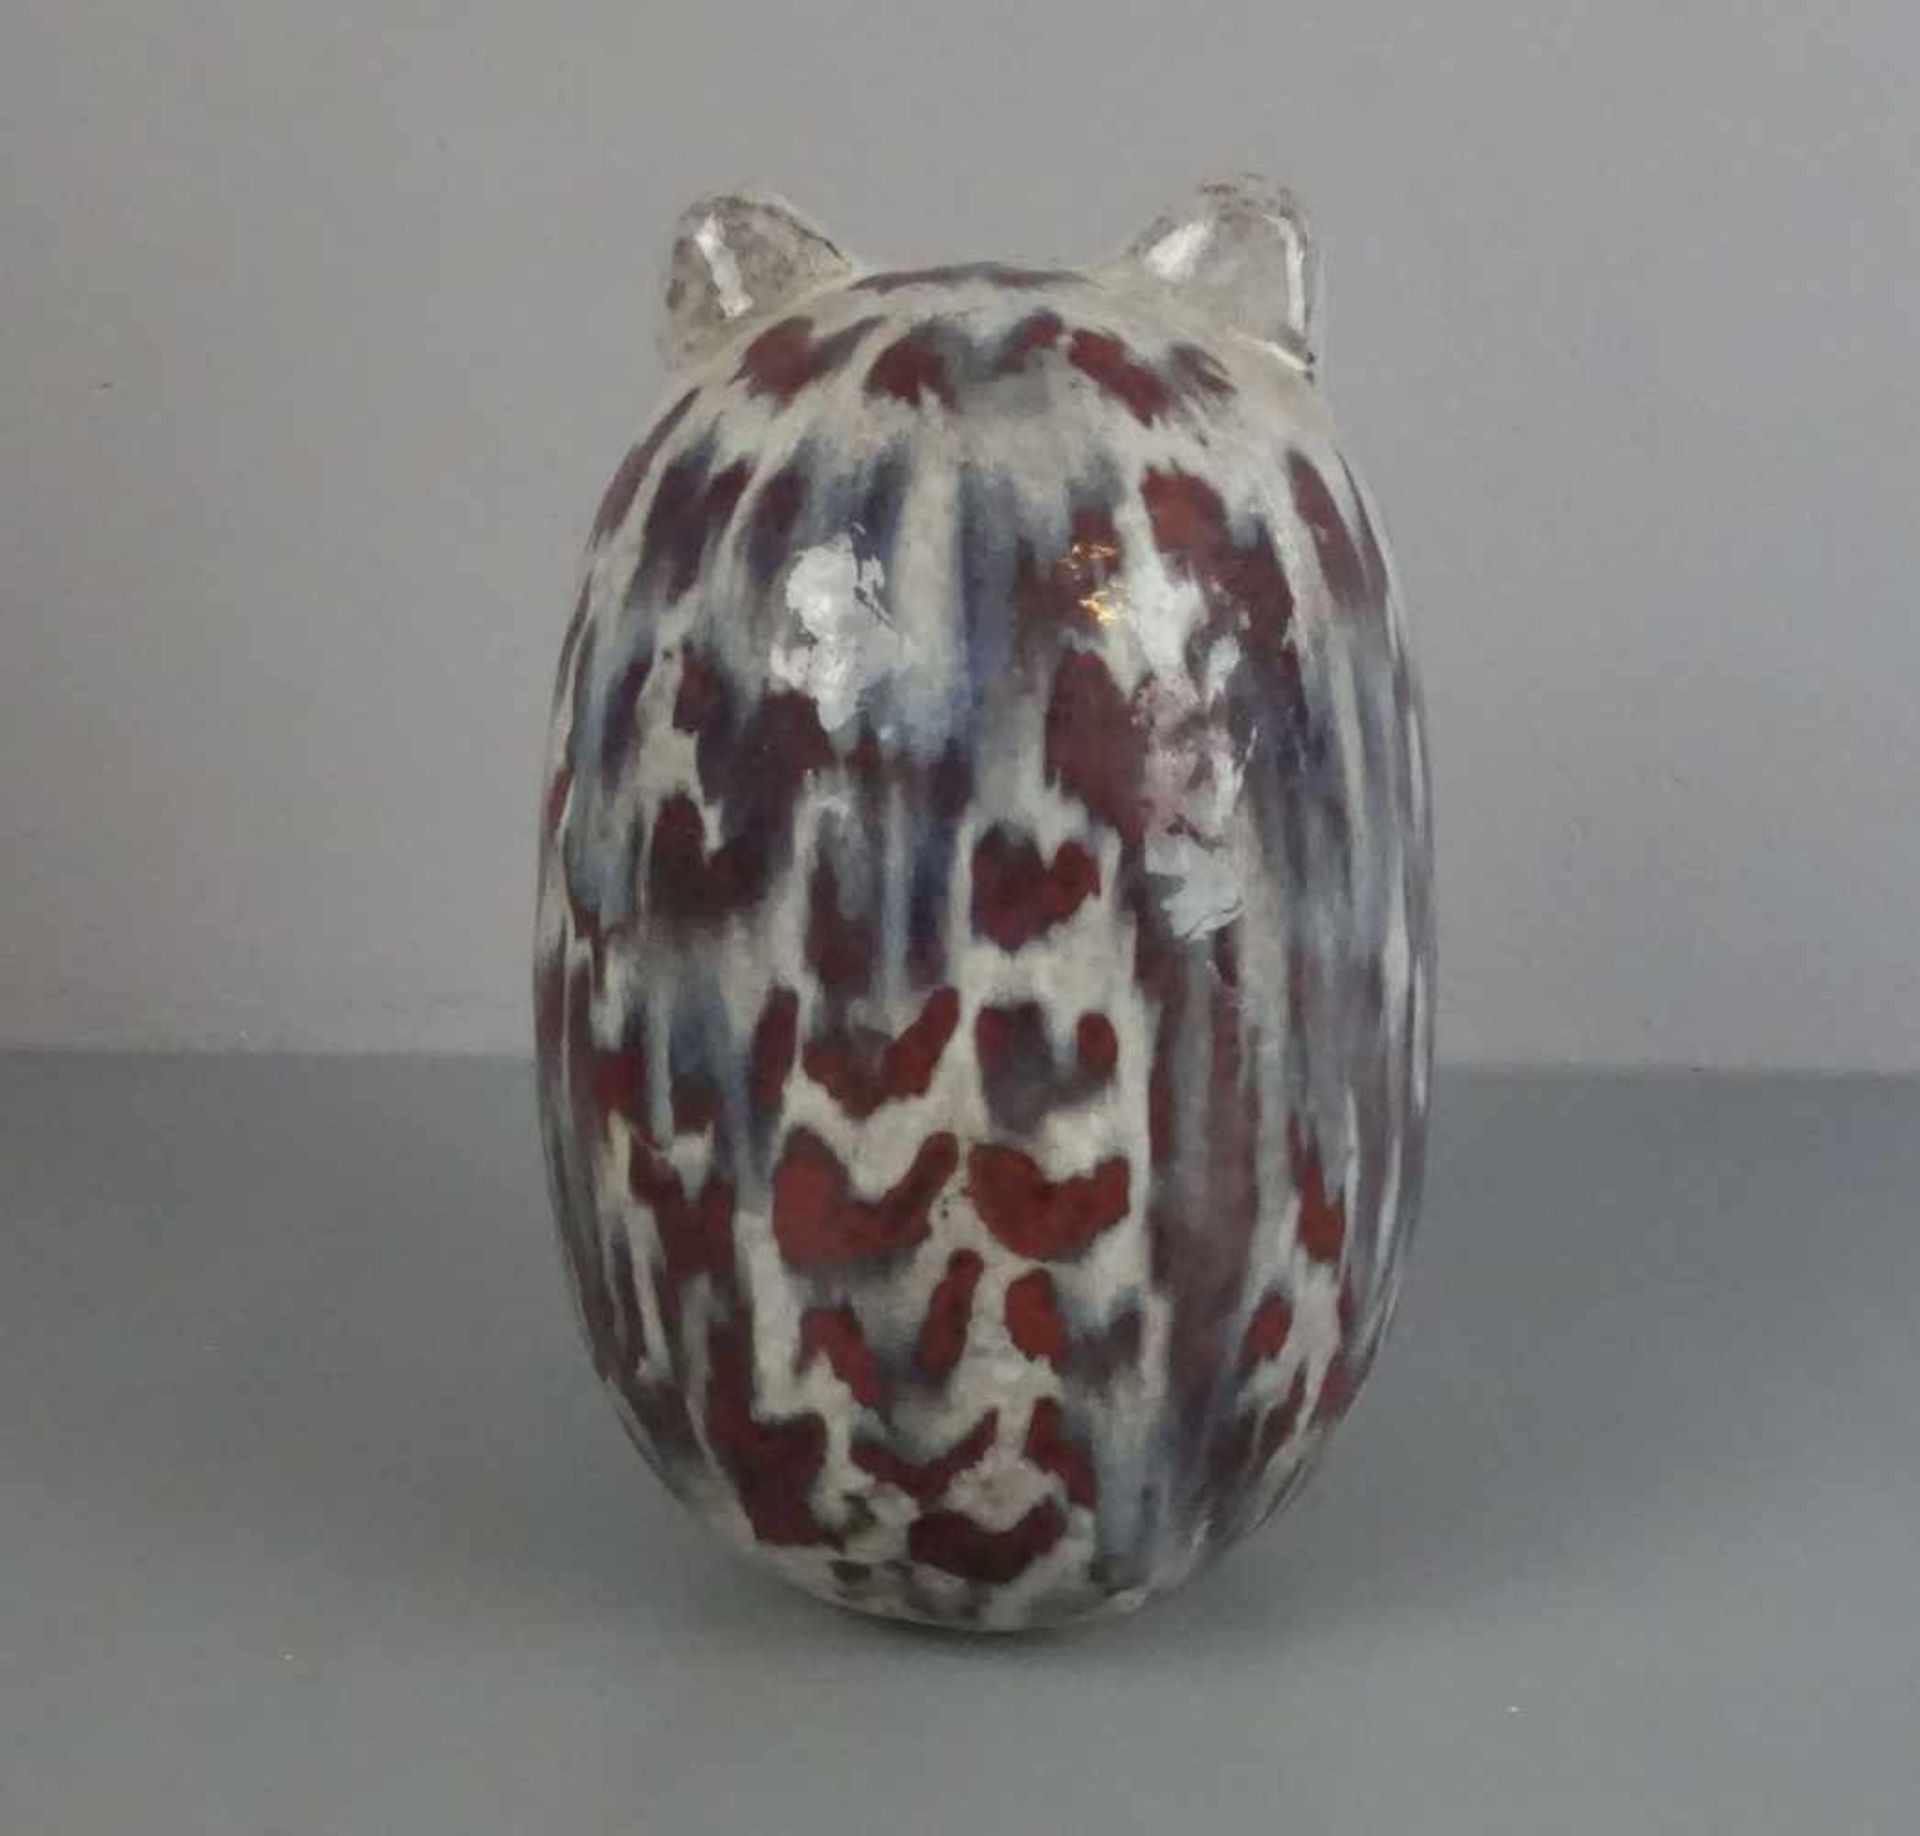 KÜNSTLERKERAMIK / SKULPTUR: "Eule" / owl pottery sculpture, Mitte 20. Jh., Studiokeramik, - Image 3 of 4